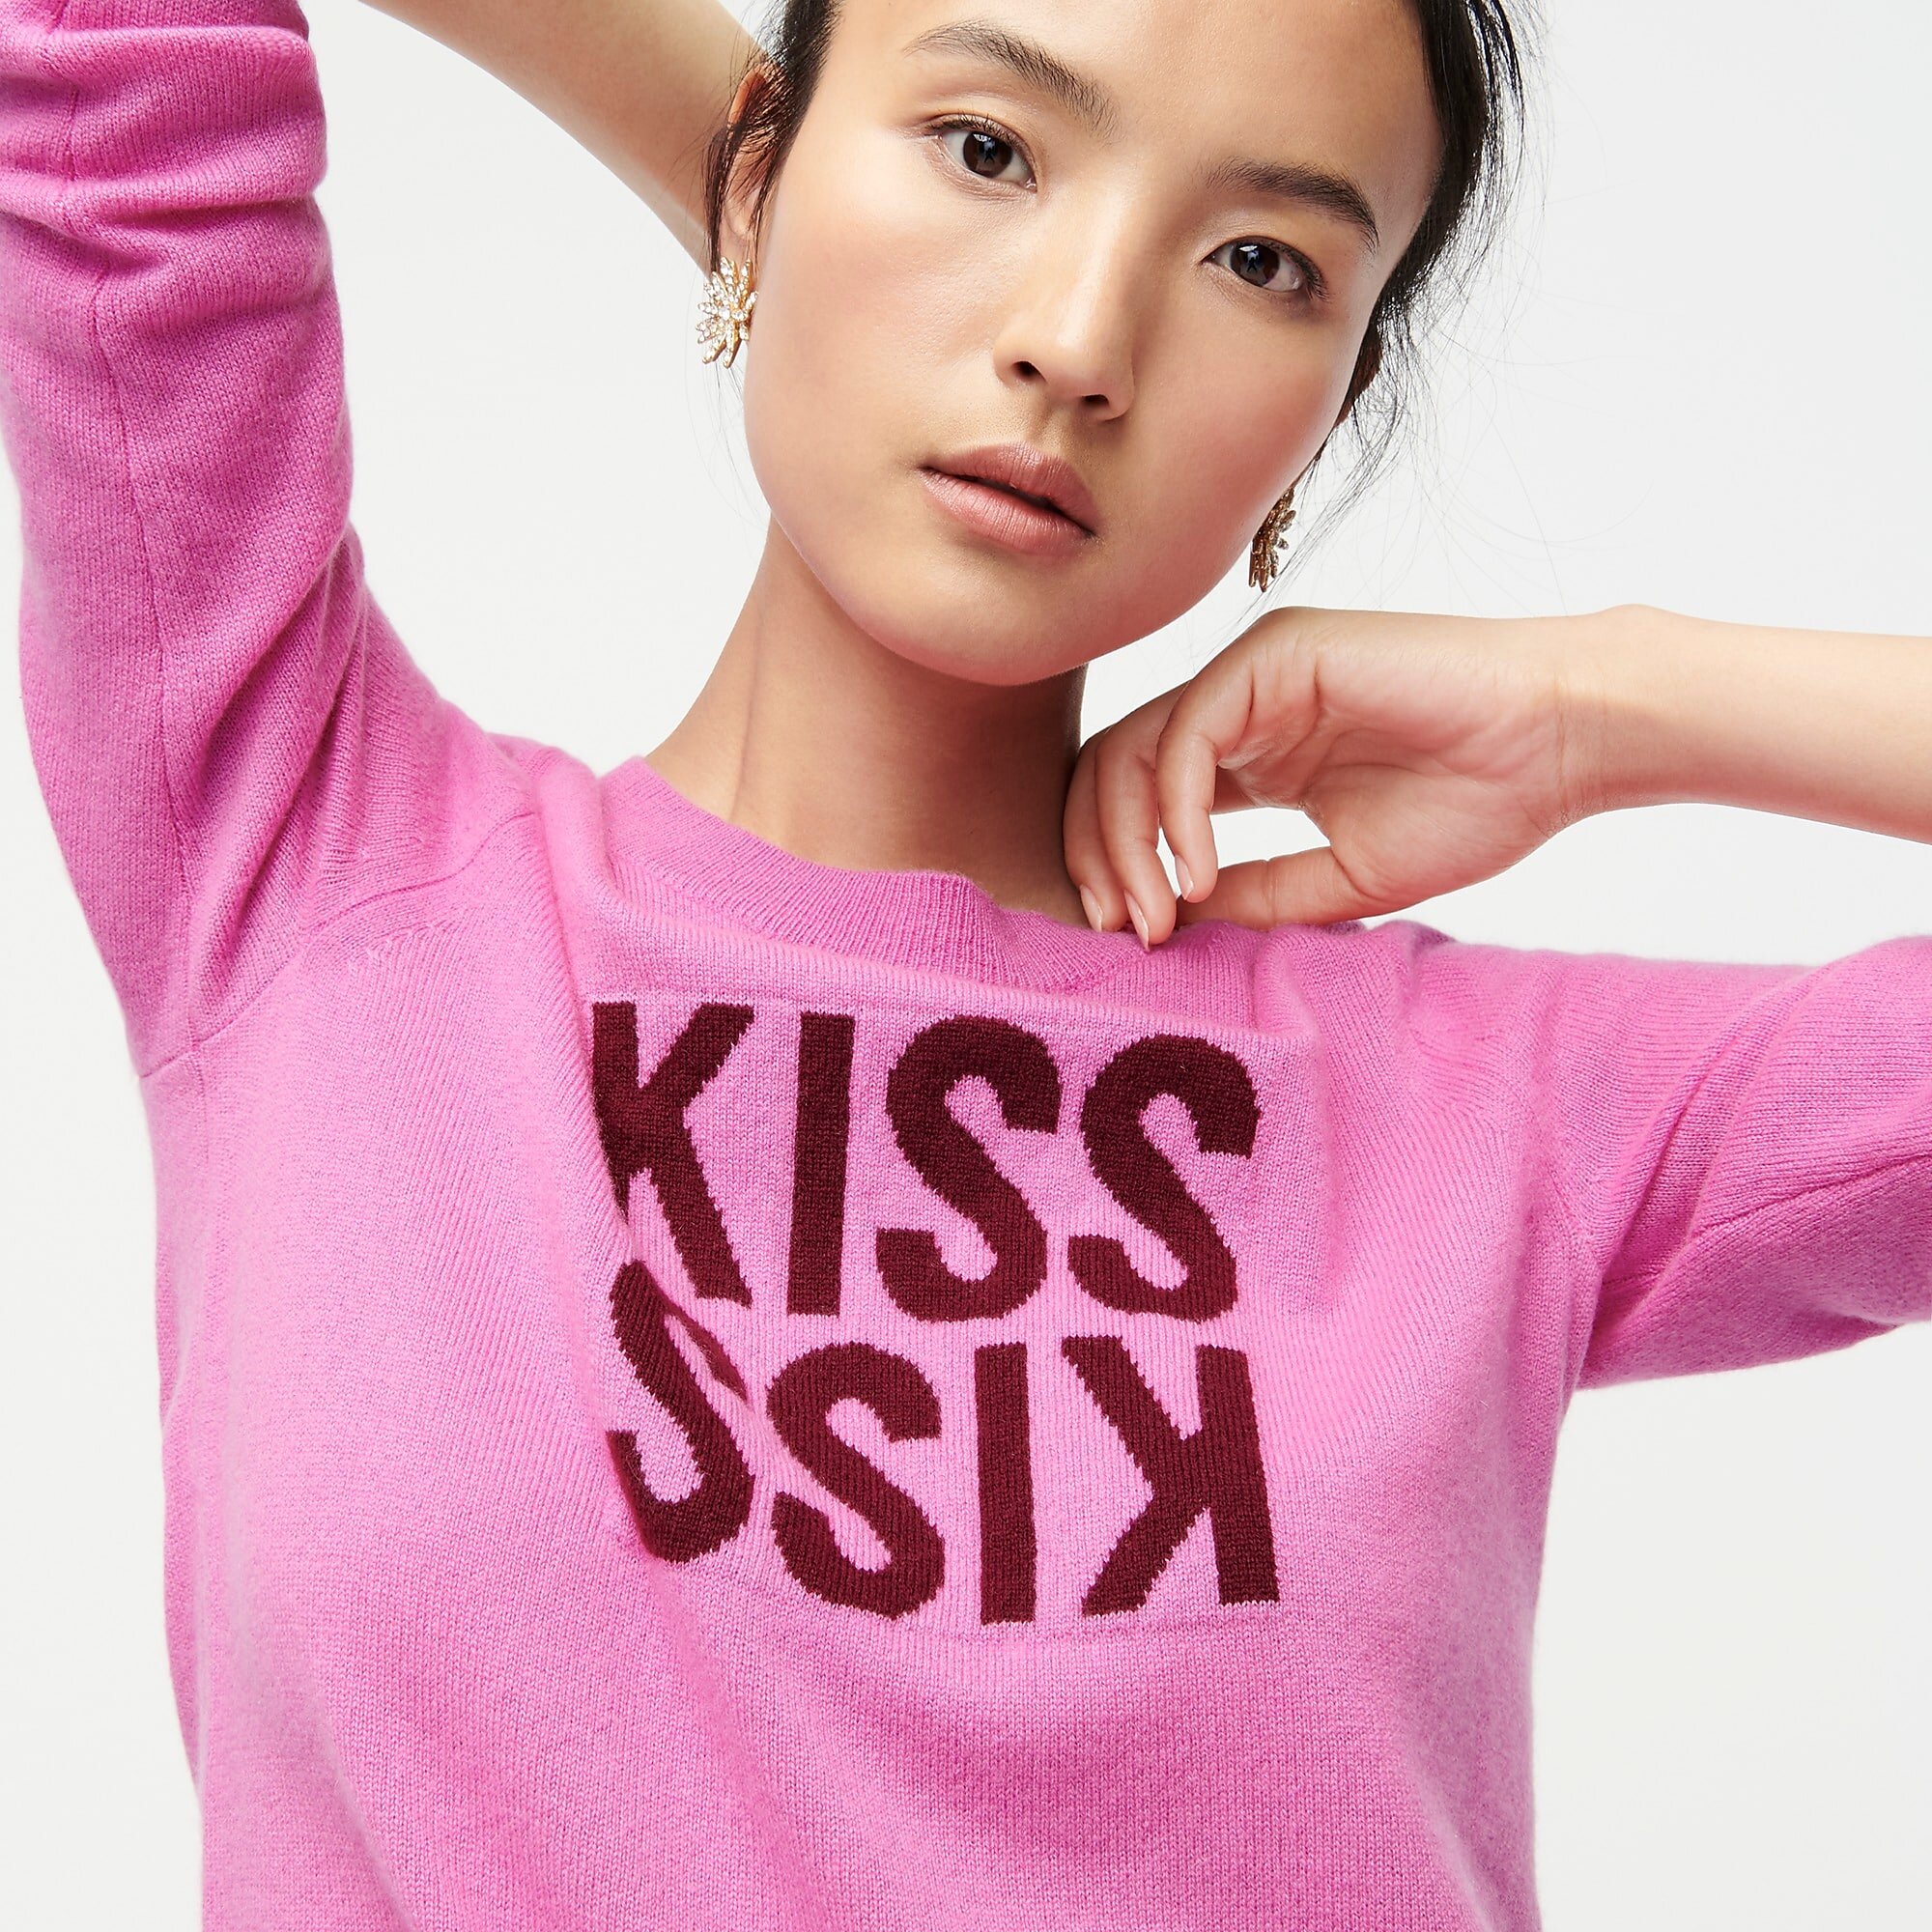 Camilla Atkins, CATKINS DESIGN for J. Crew, Fall 2019 KISS KISS graphic intarsia cashmere.jpeg